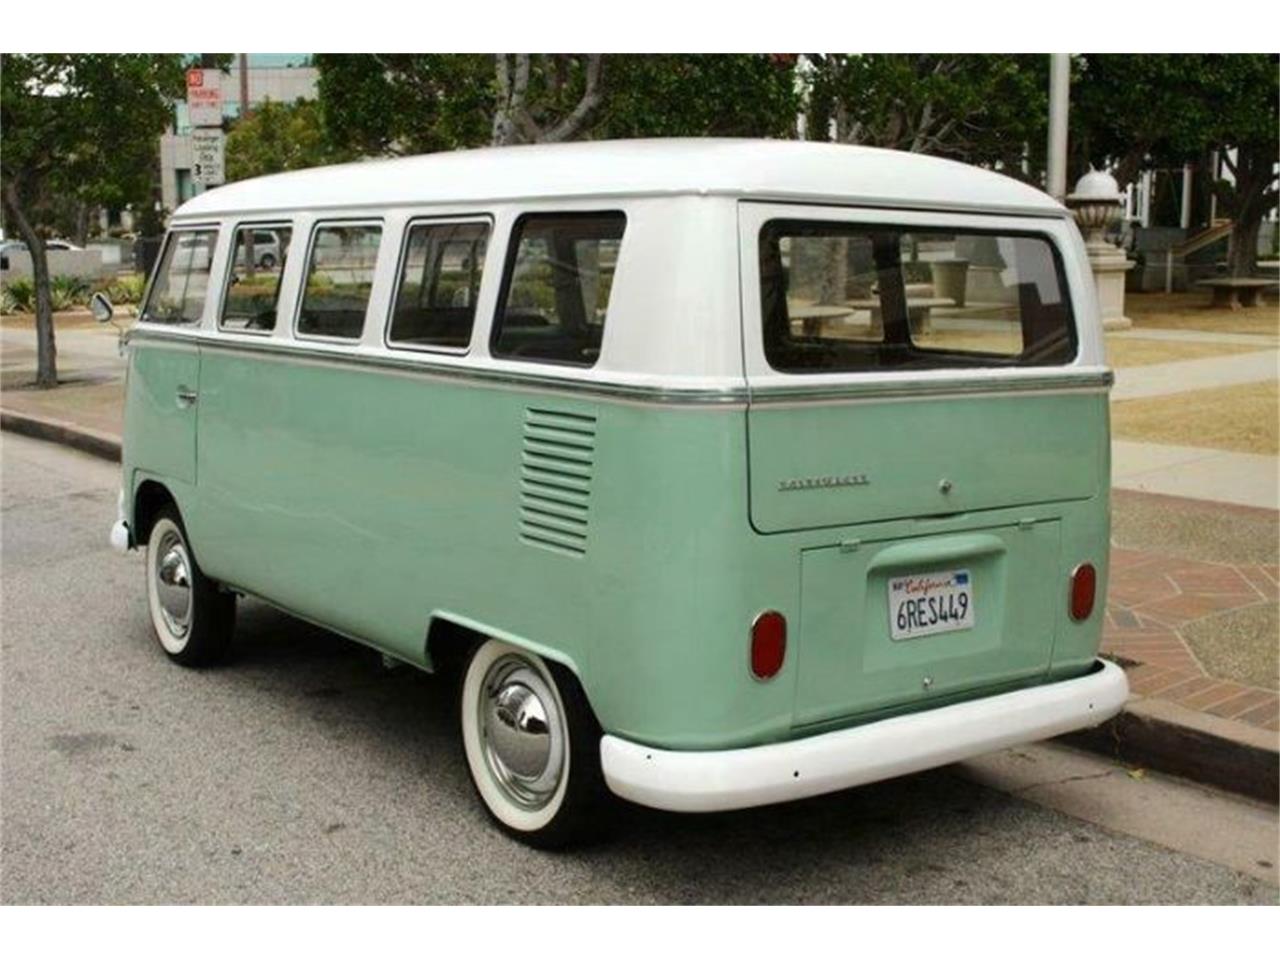 1965 Volkswagen Bus for Sale | ClassicCars.com | CC-1208268